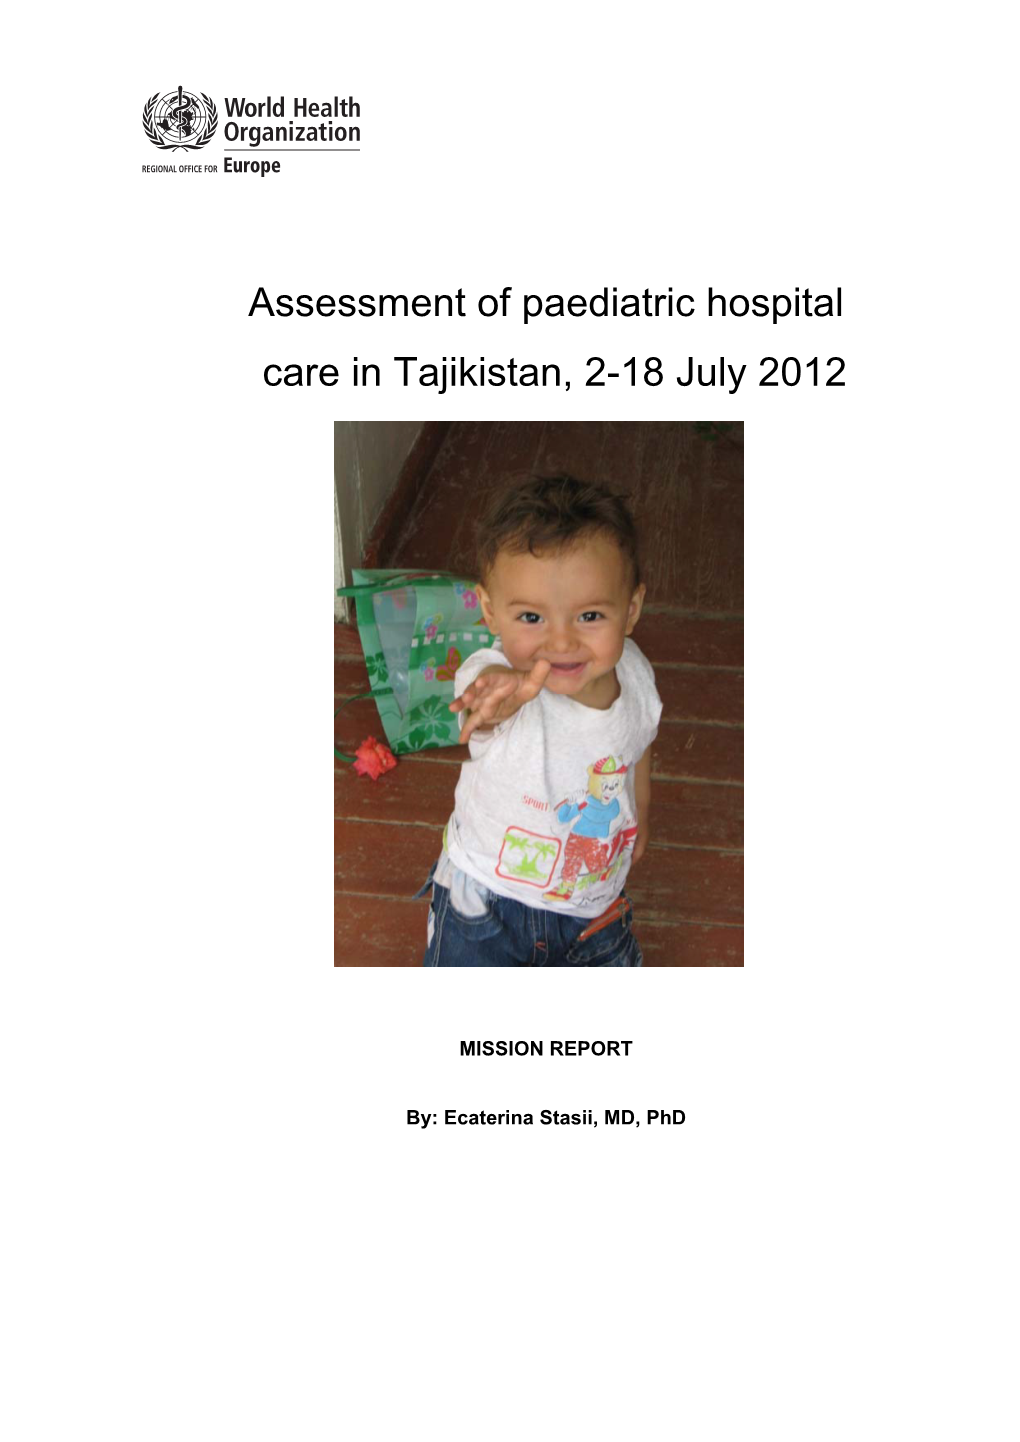 Assessment of Paediatric Hospital Care in Tajikistan, 2-18 July 2012